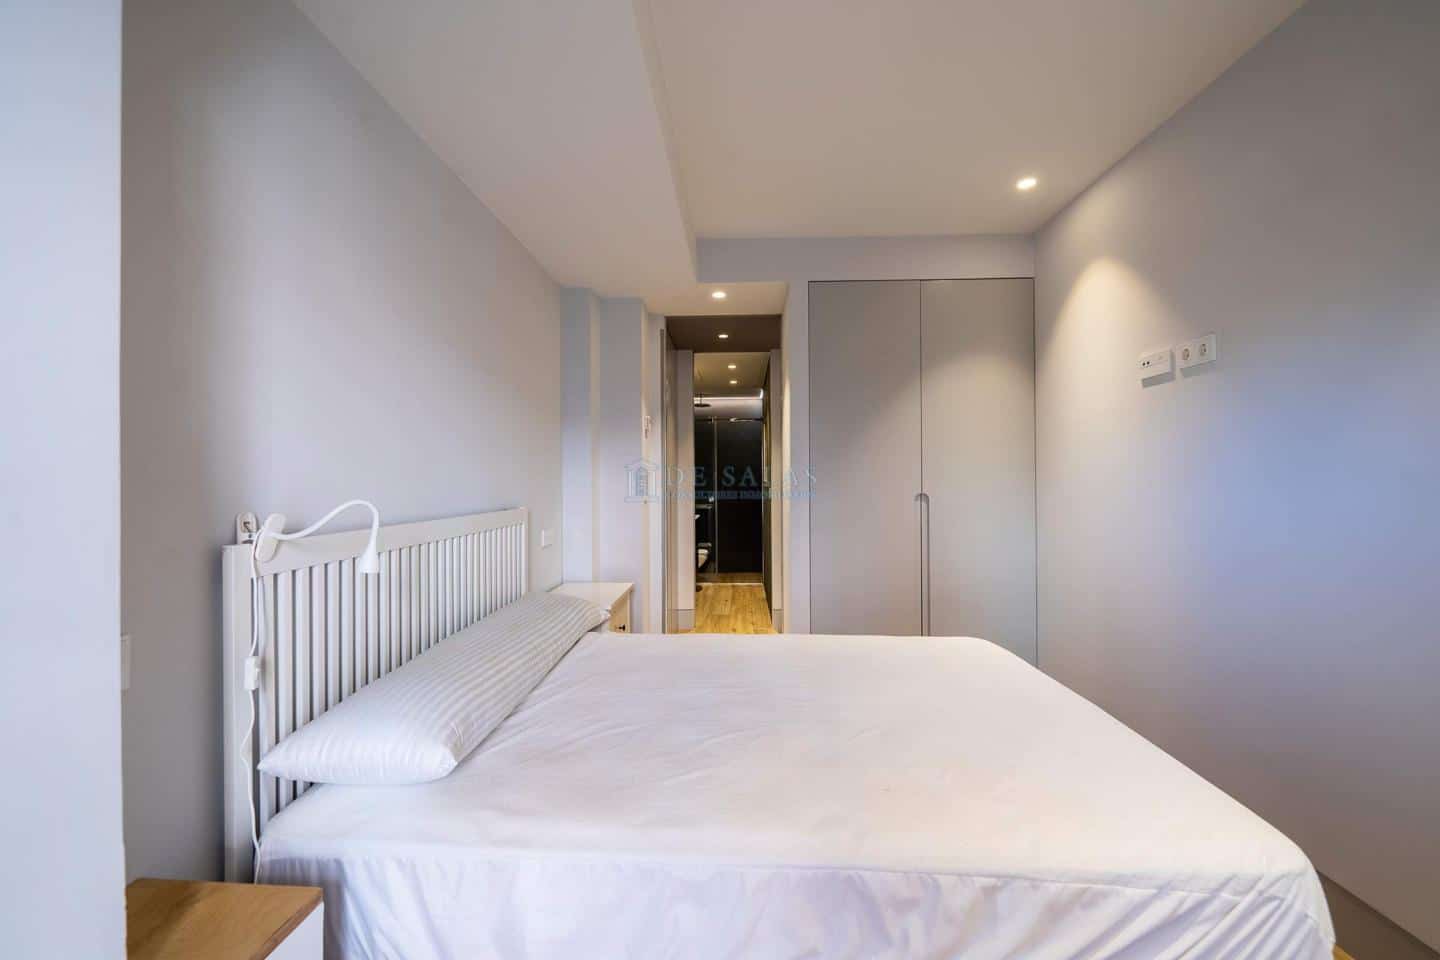 Casa Chalet en venta en Madrid de 43m2 REF:MIV01873